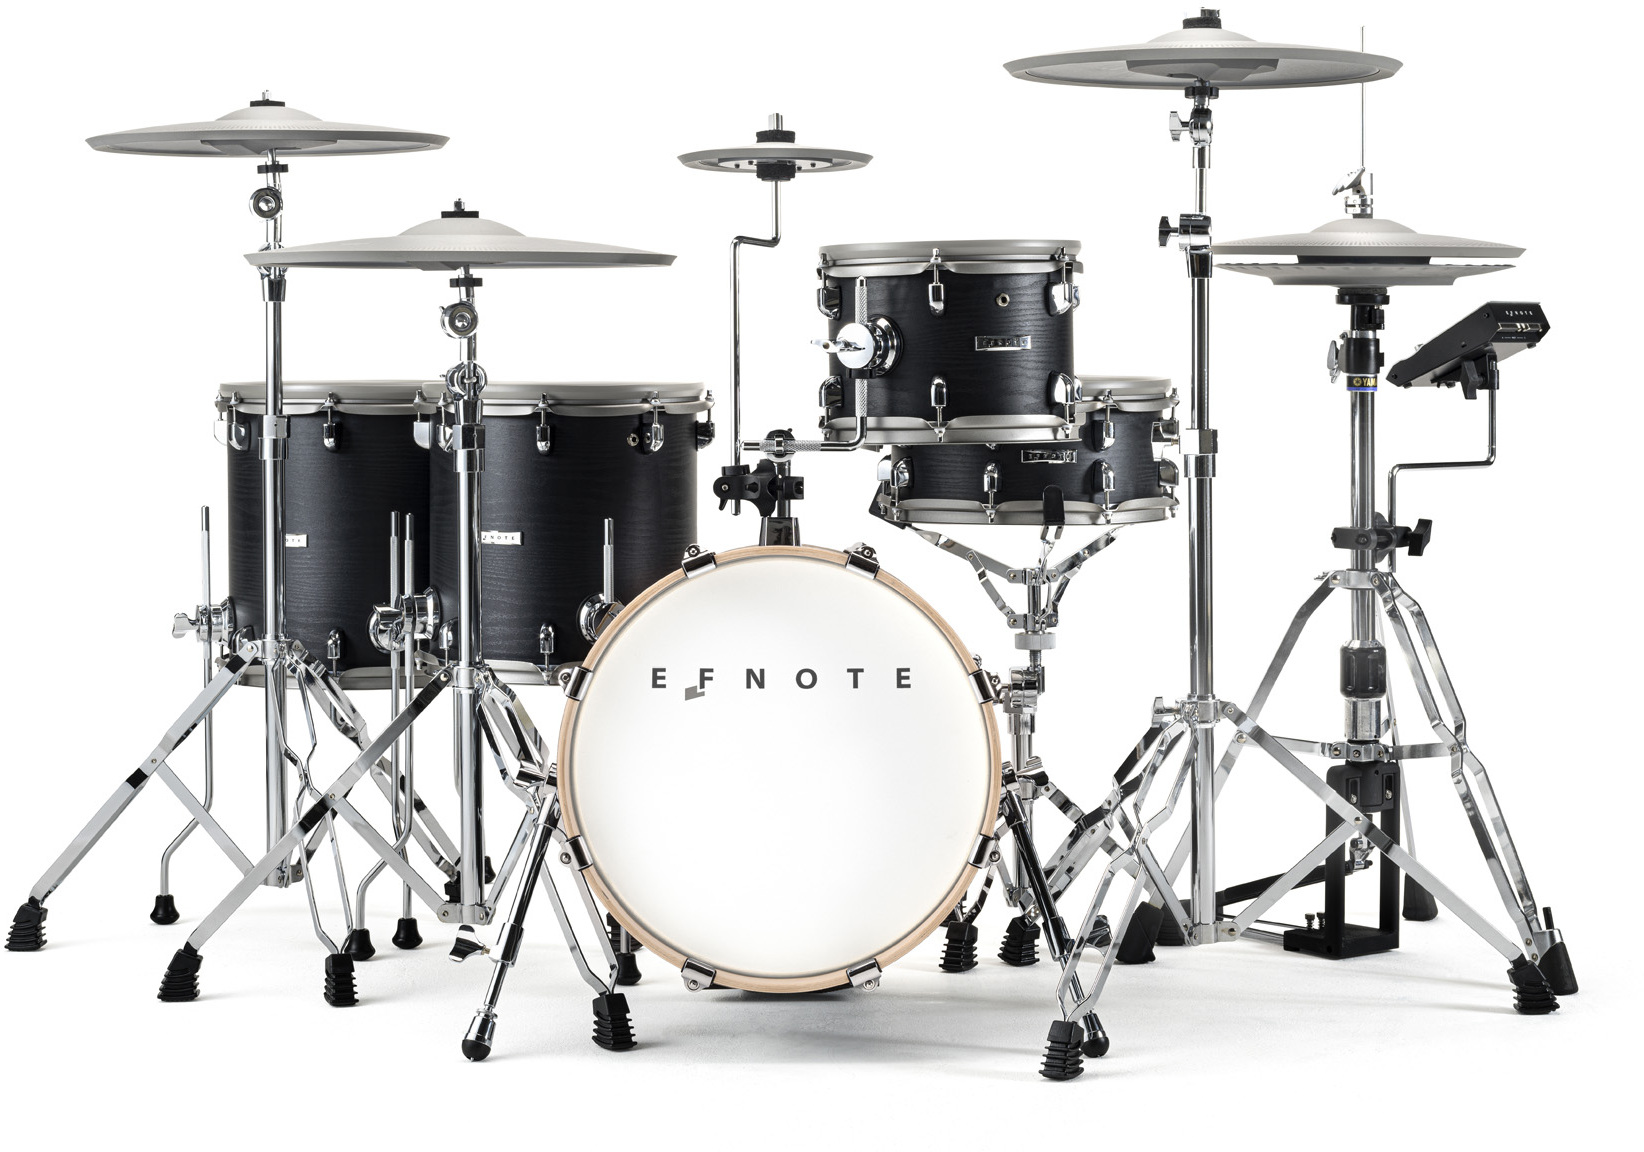 Efnote Efd5x Drum Kit - Komplett E-Drum Set - Main picture